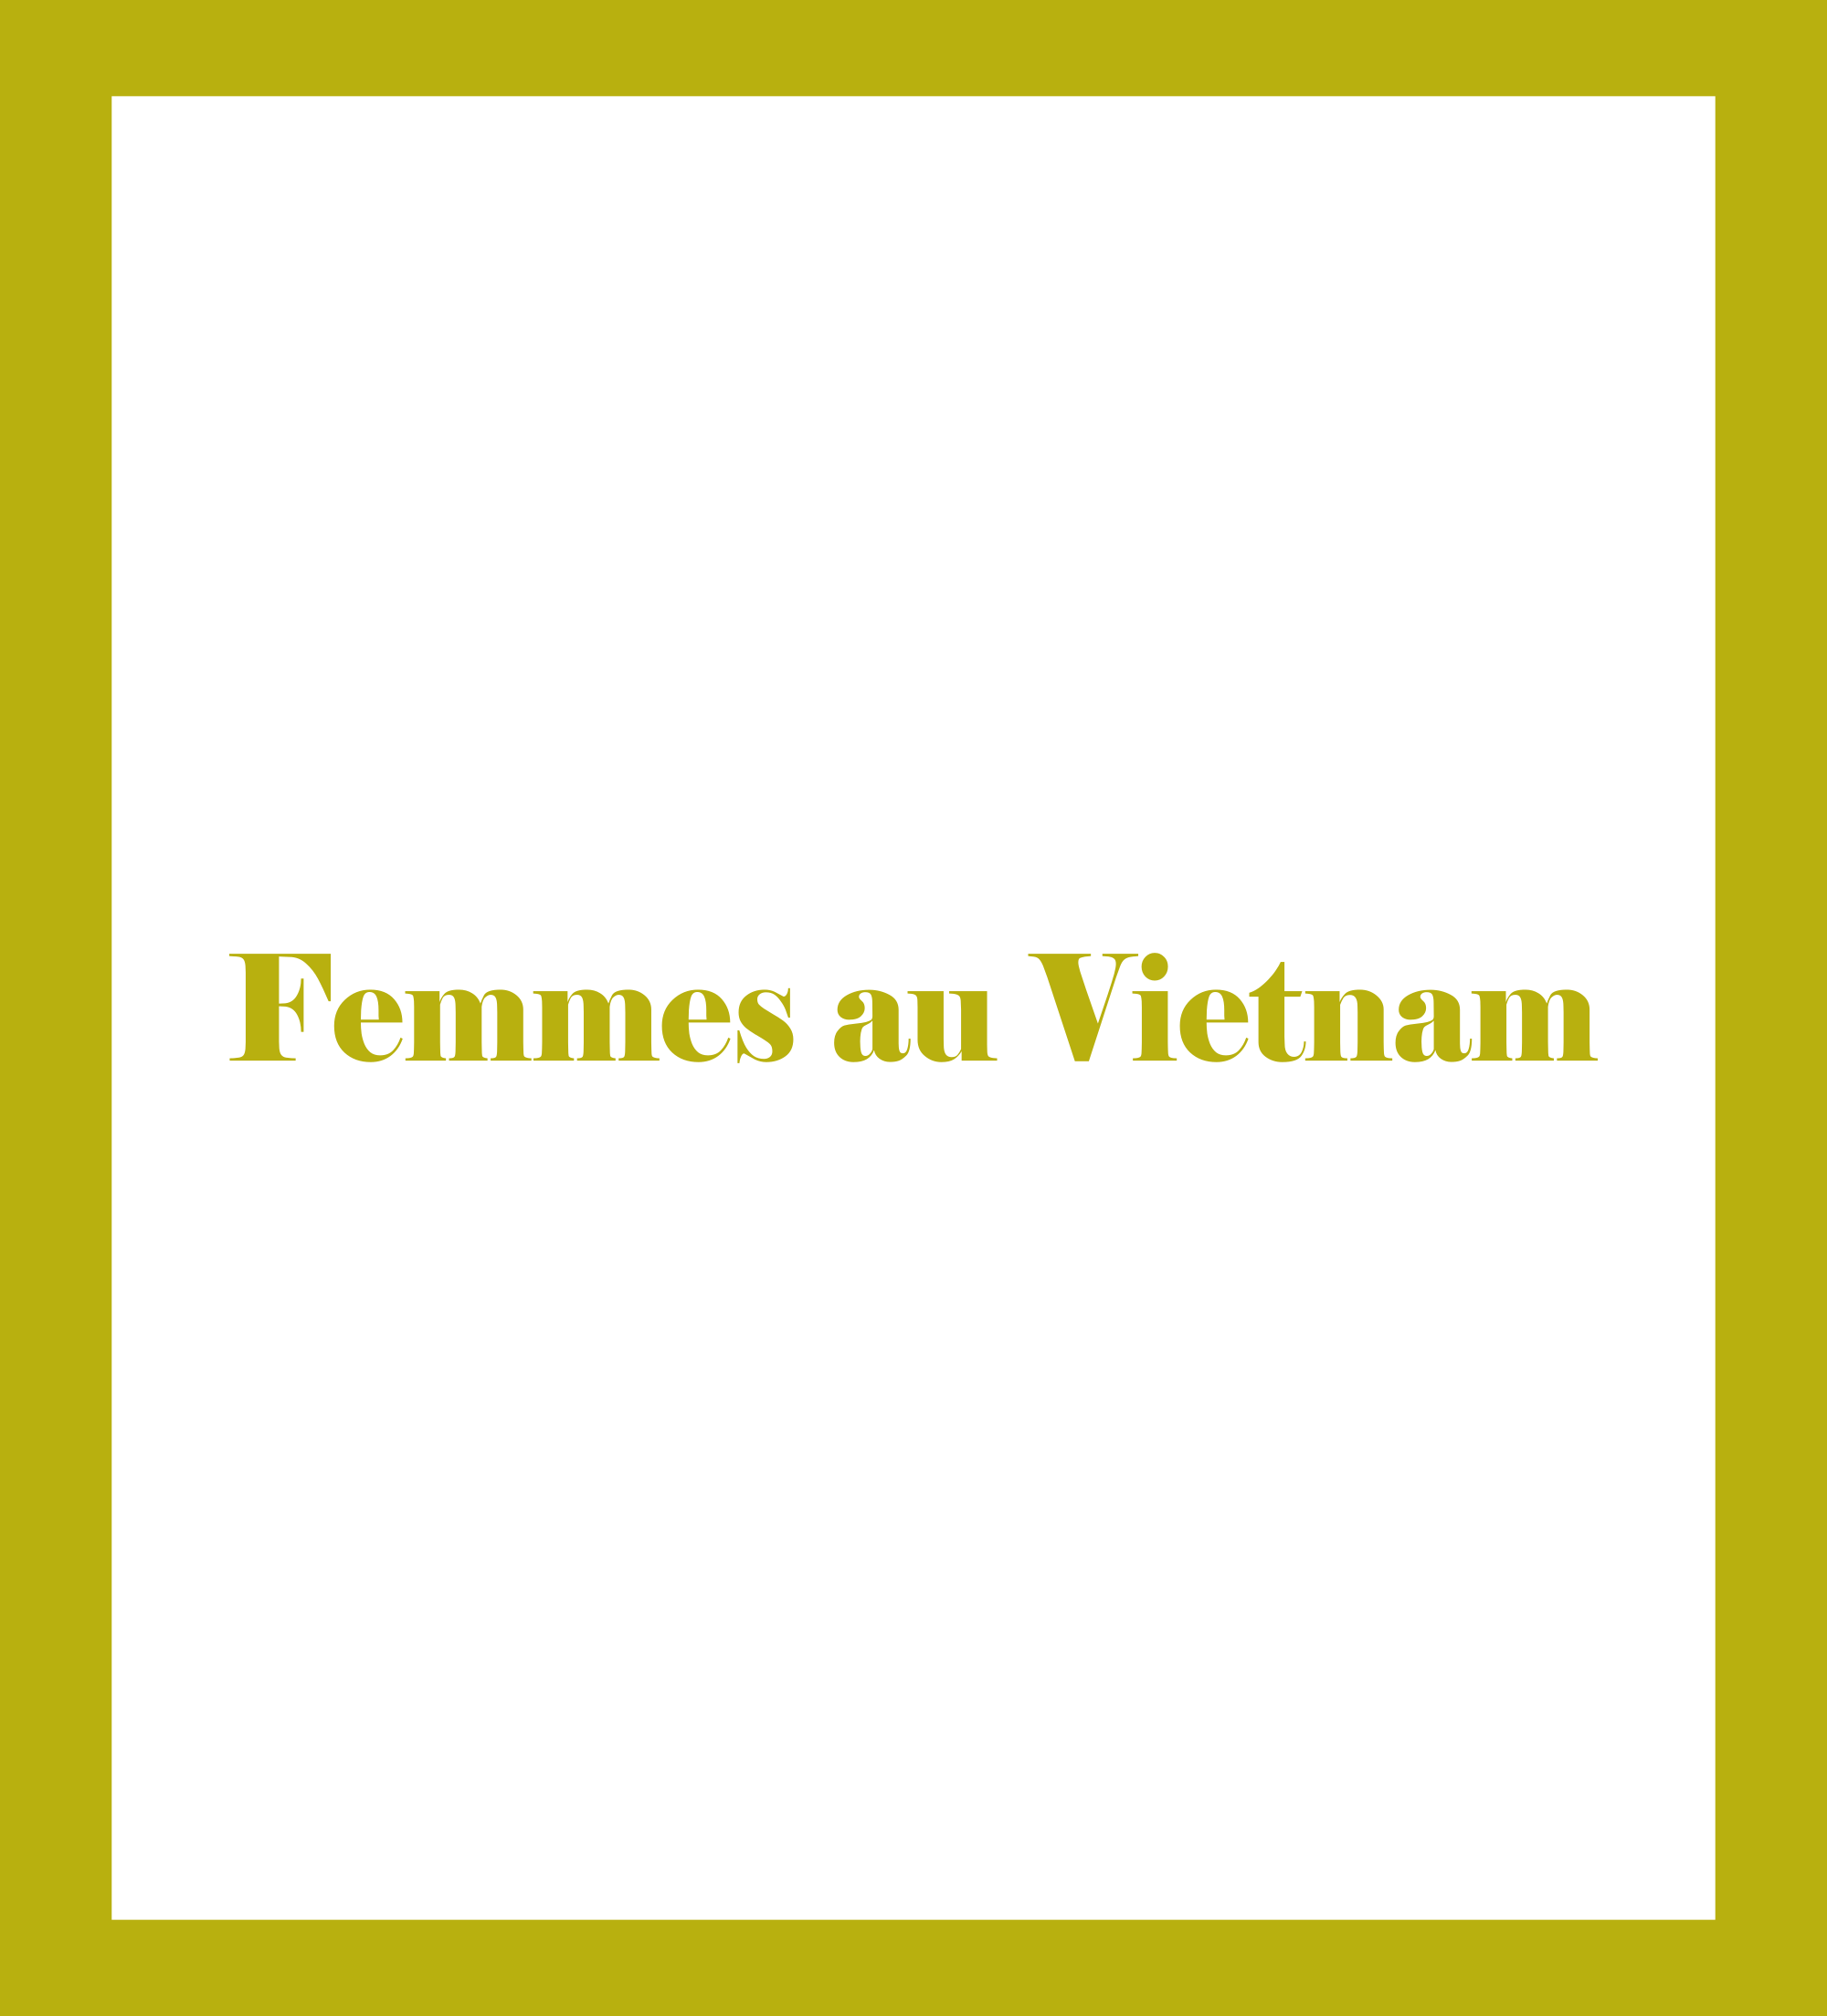 Caratula de Femmes au Vietnam (Mujeres de Vietnam) 